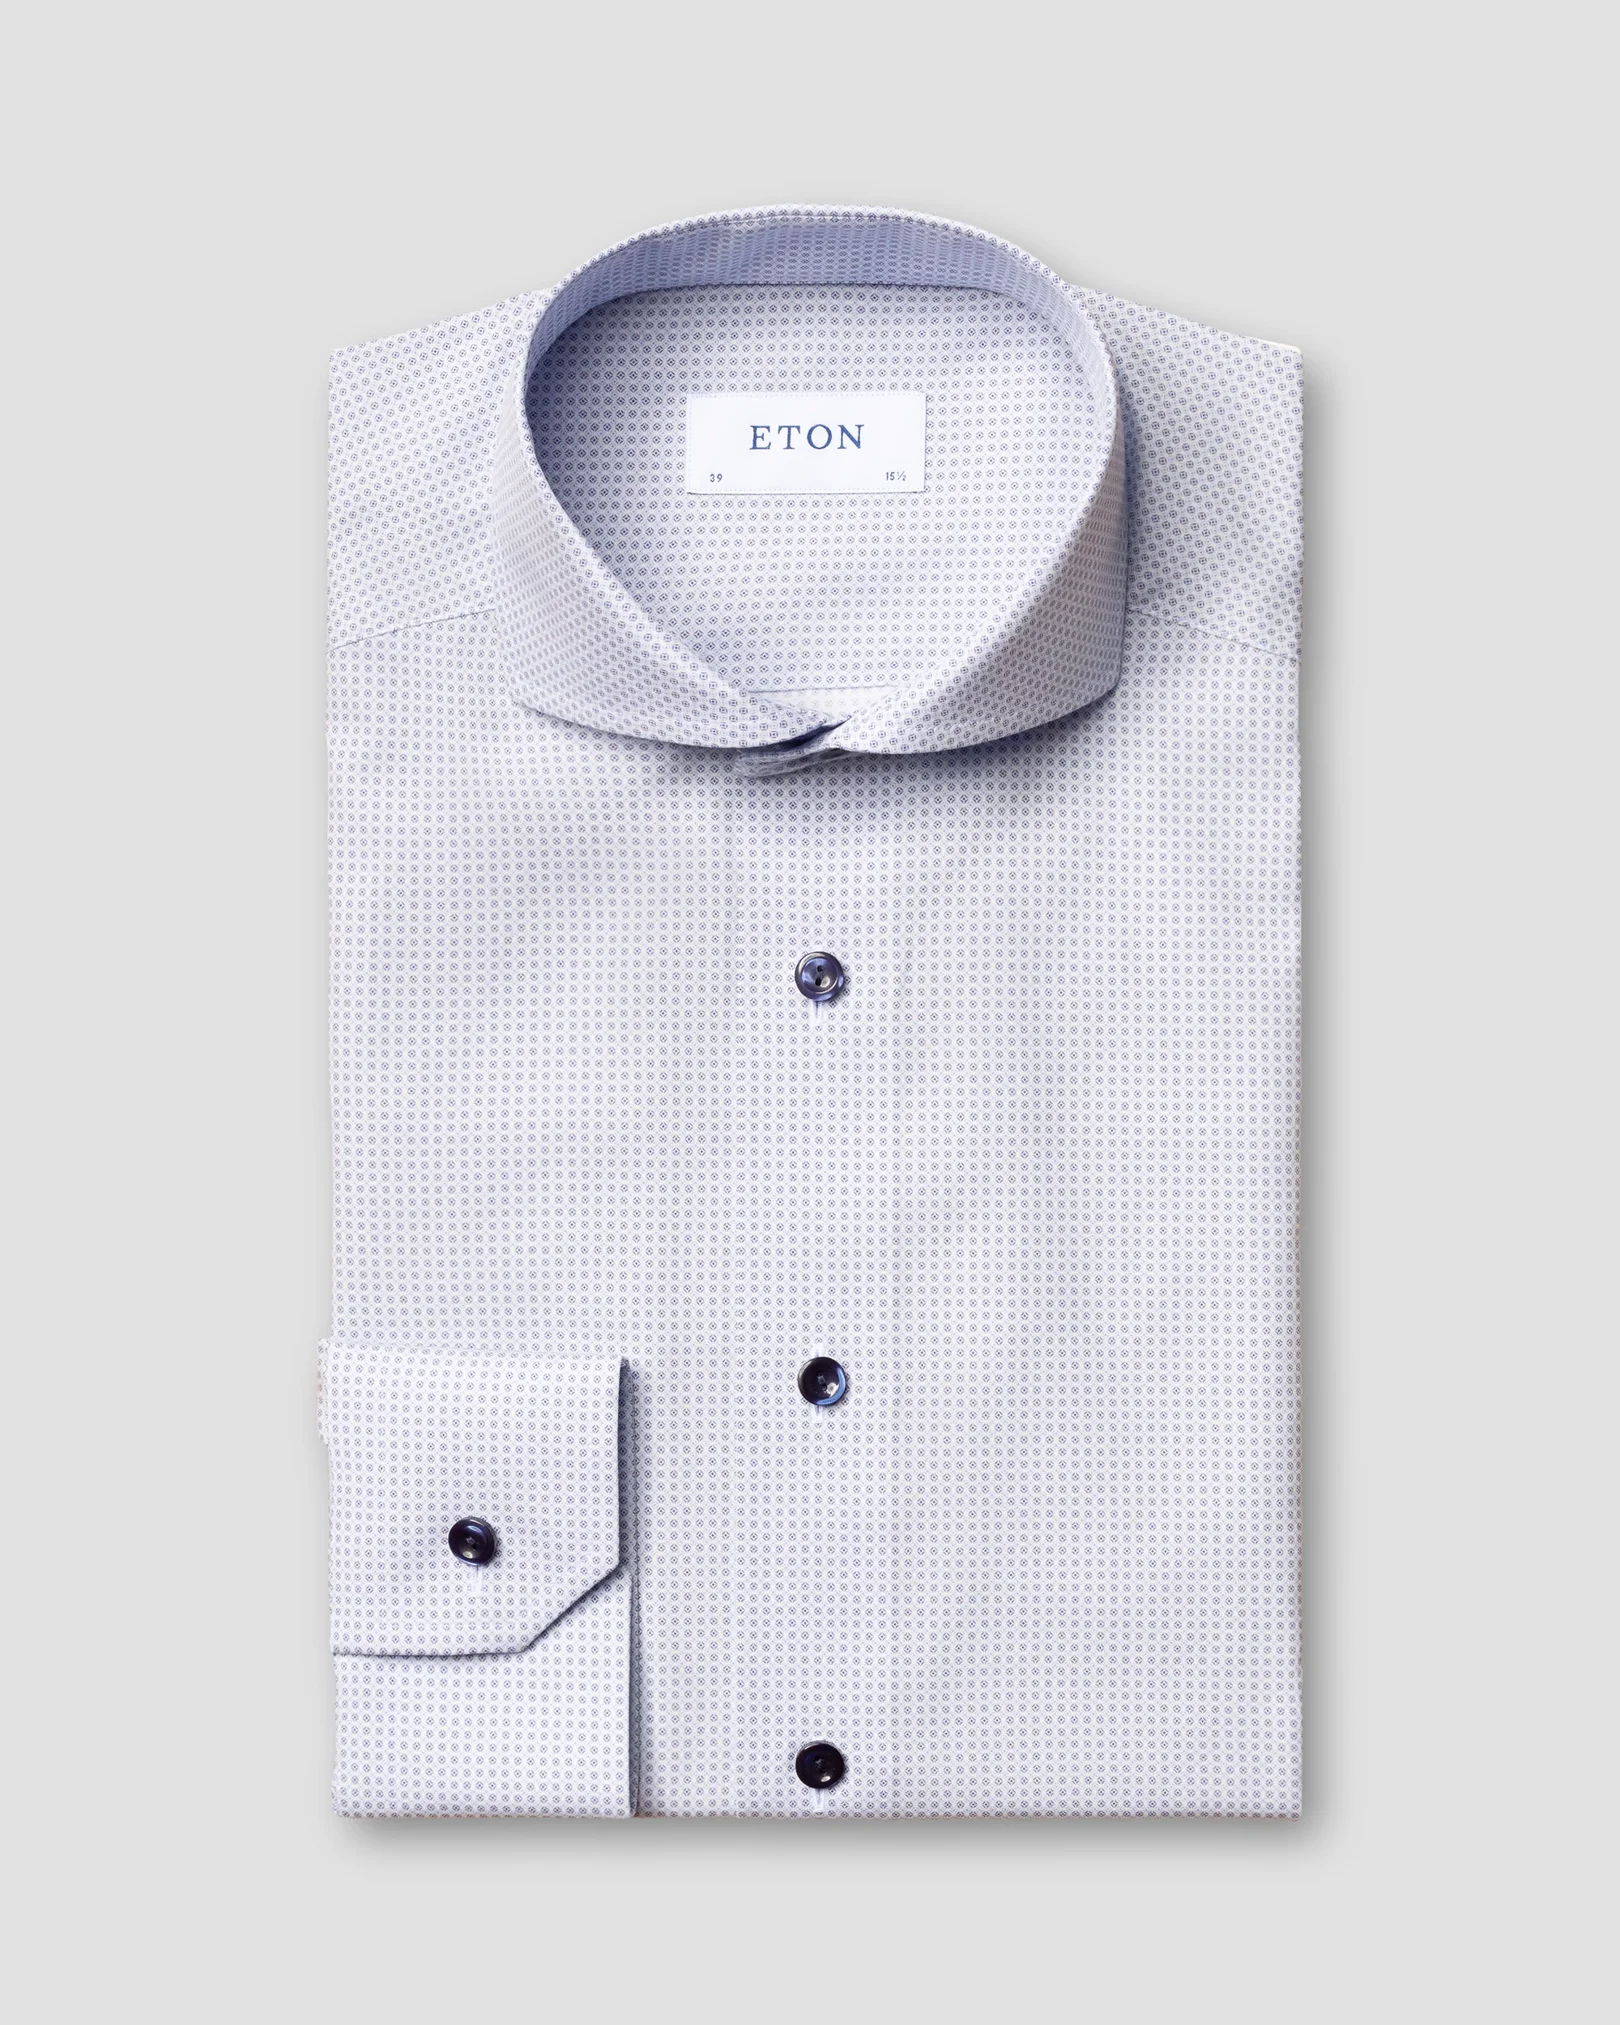 Eton - blue micro print shirt extreme cut away single super slim